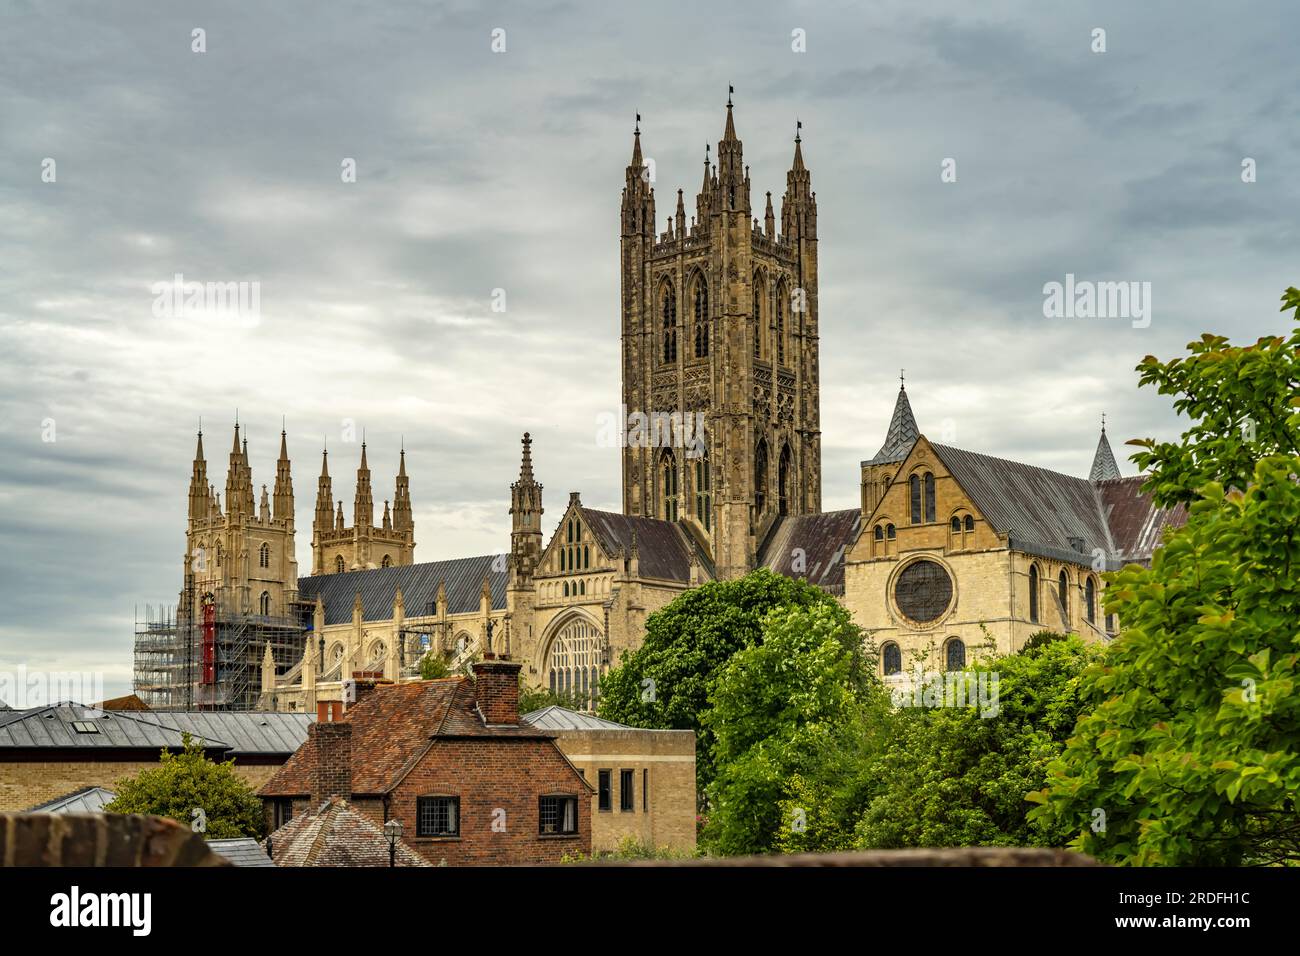 Die Kathedrale von Canterbury, England, Großbritannien, Europa | Cathédrale de Canterbury, Angleterre, Royaume-Uni de Grande-Bretagne, Europe Banque D'Images